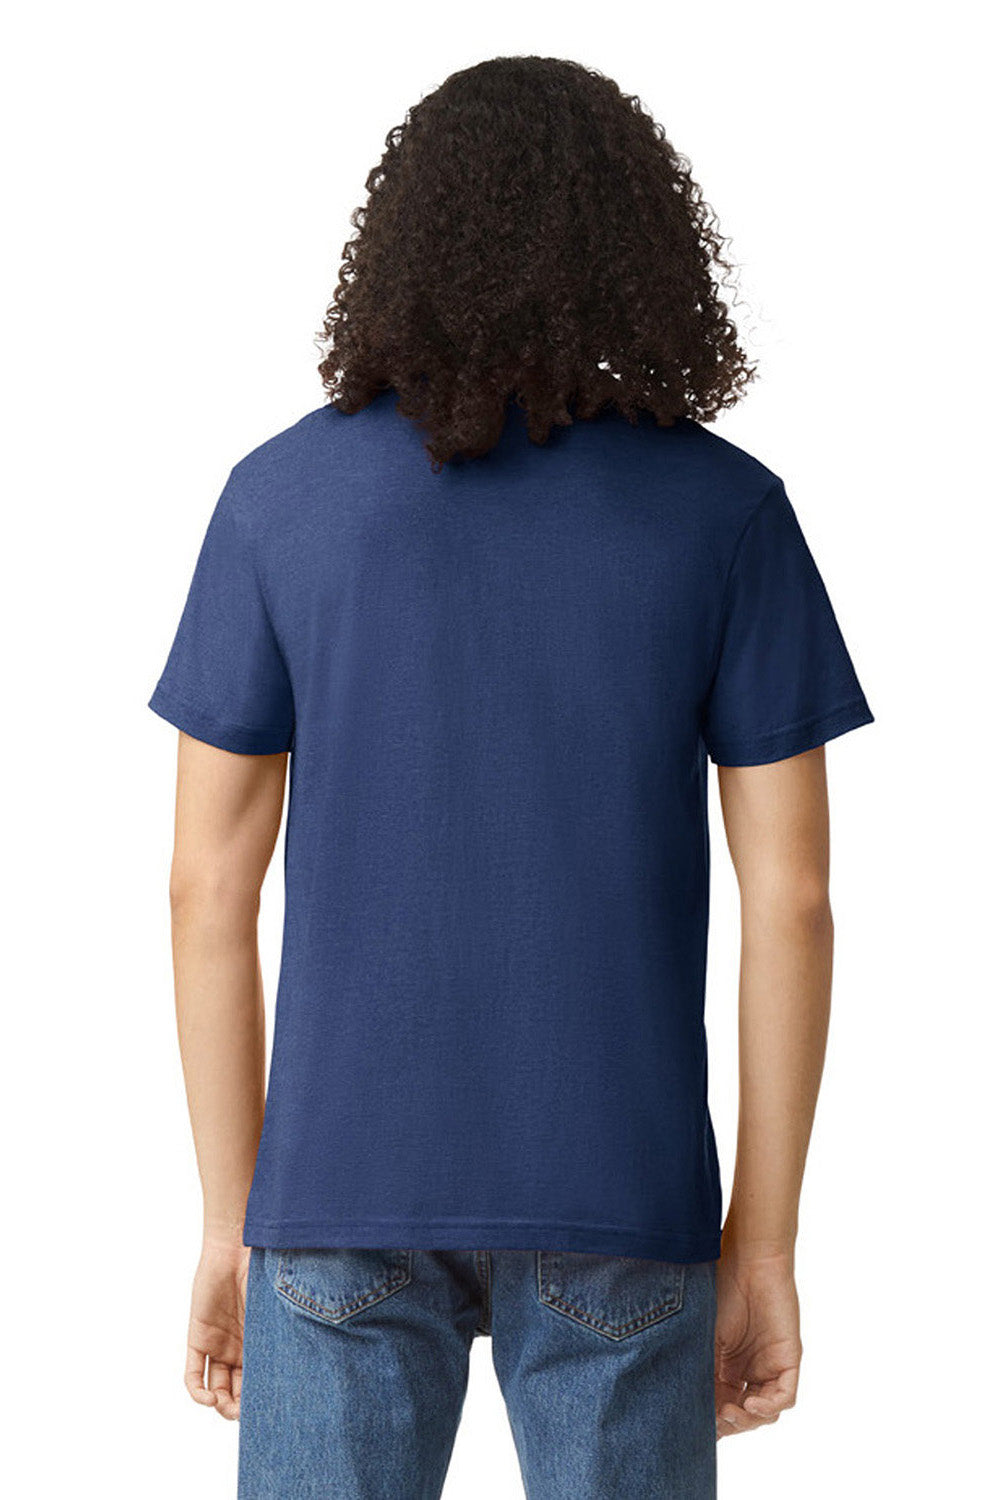 American Apparel 2001CVC Mens CVC Short Sleeve Crewneck T-Shirt Heather Indigo Blue Model Back